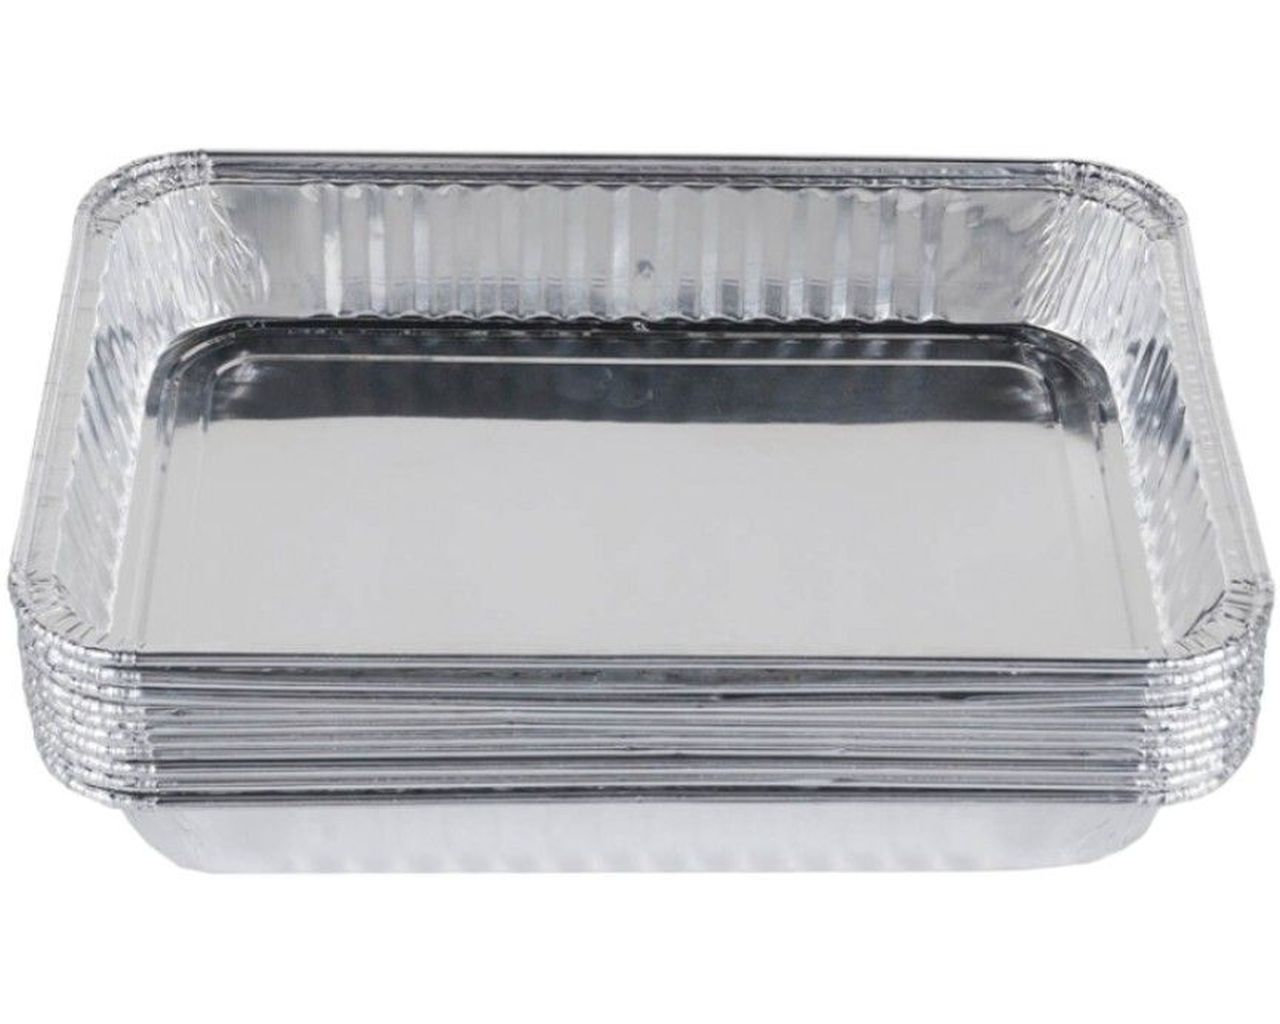 Aluminium Drip Tray (10 Pack)  Everdure by Heston Blumenthal